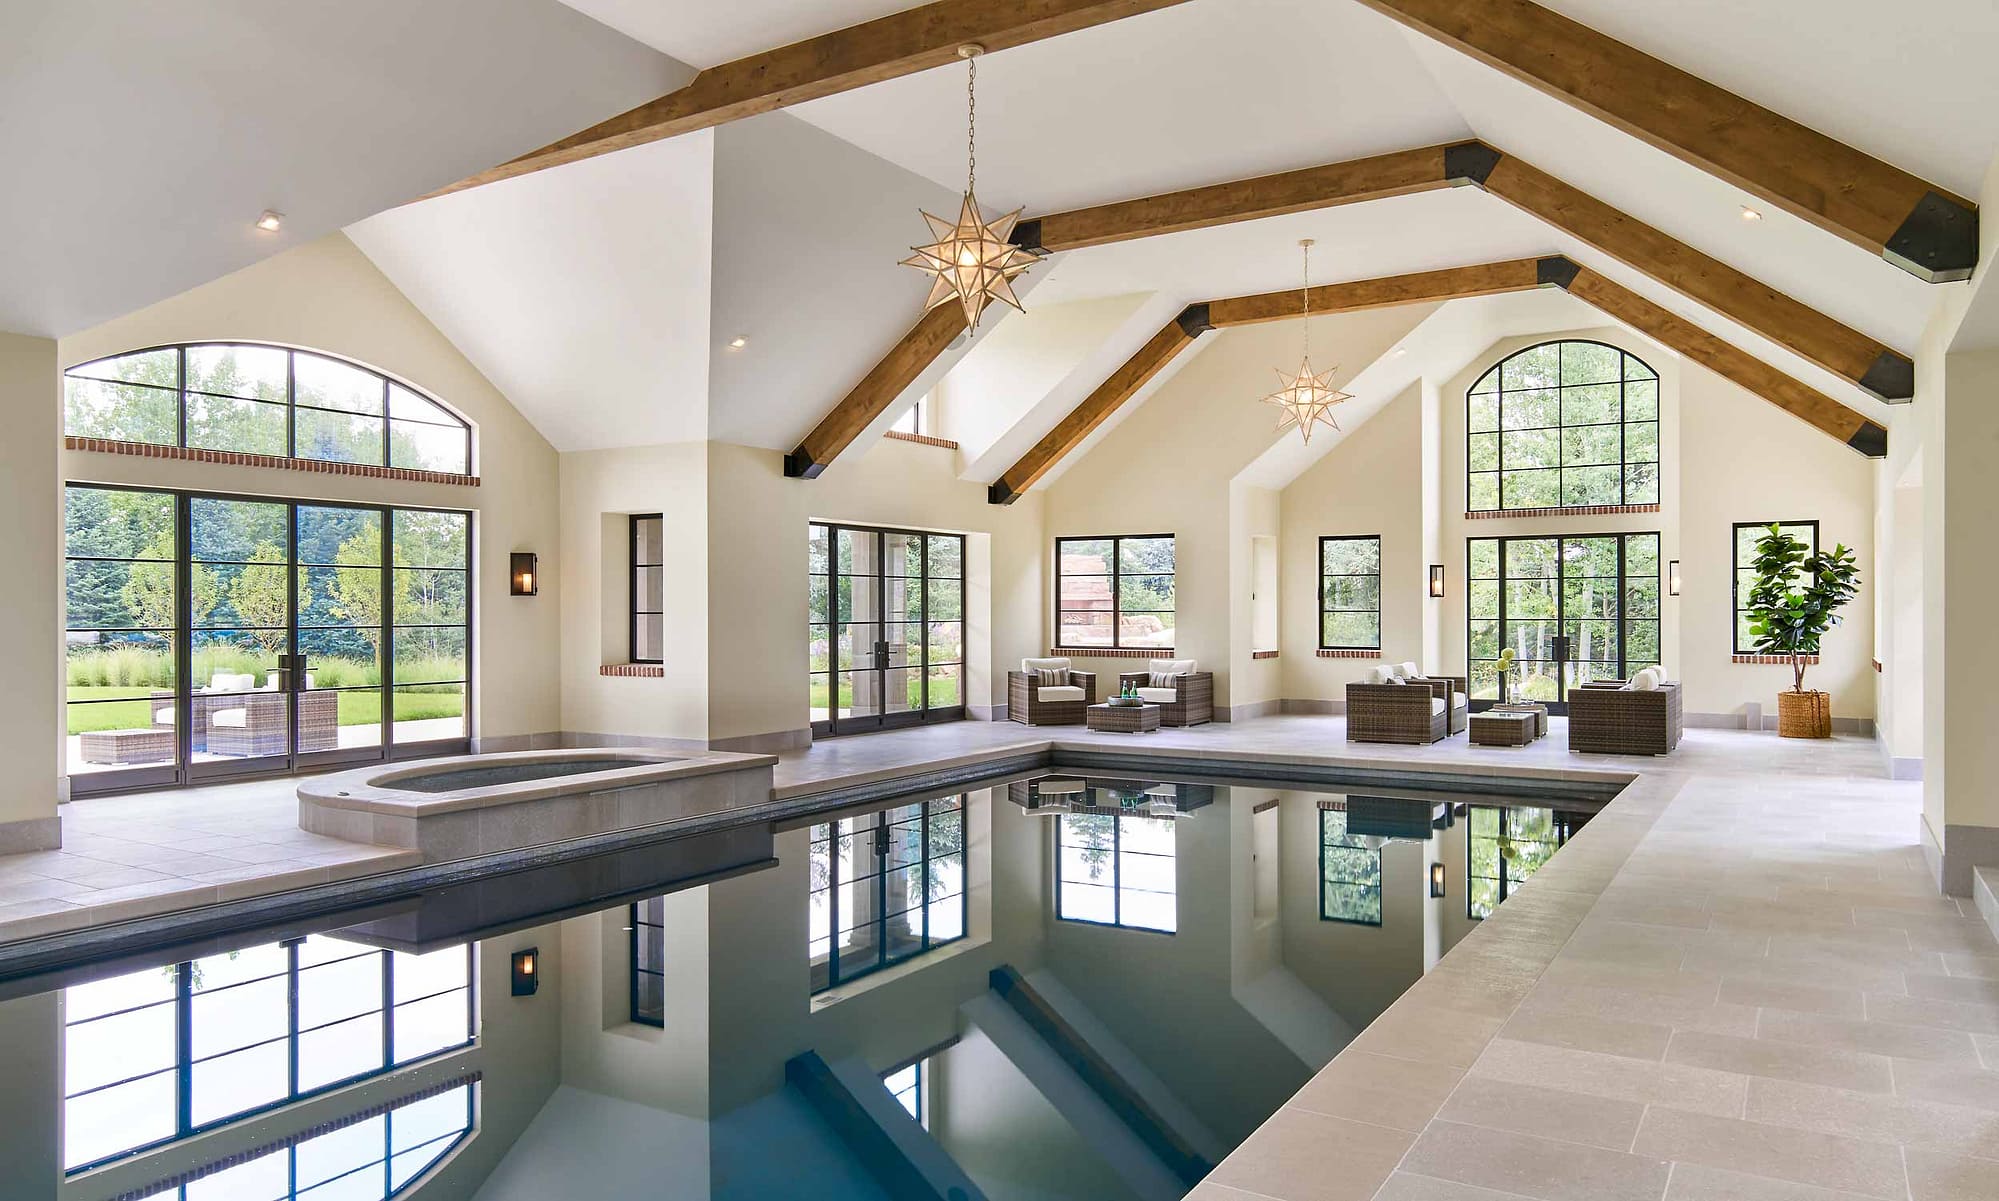 Brombal's custom luxury metal windows and doors are featured in this indoor pool